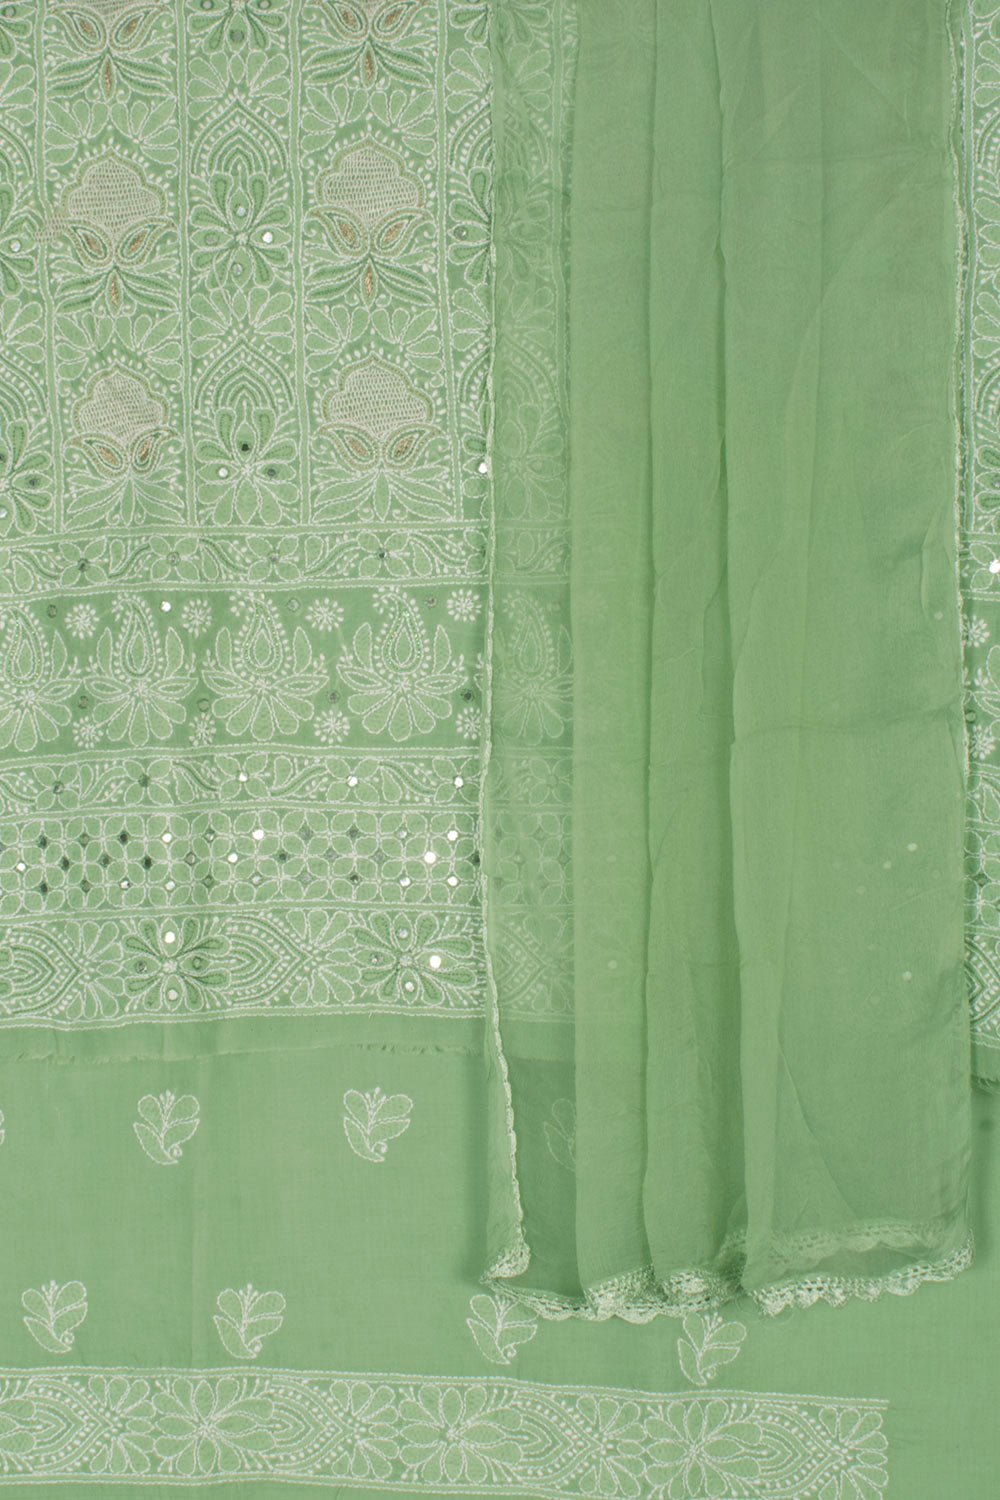 Hand Embroidered Chikankari Cotton 3-Piece Salwar Suit Material with Mirror, Zari Work and Chiffon Crochet Border Dupatta